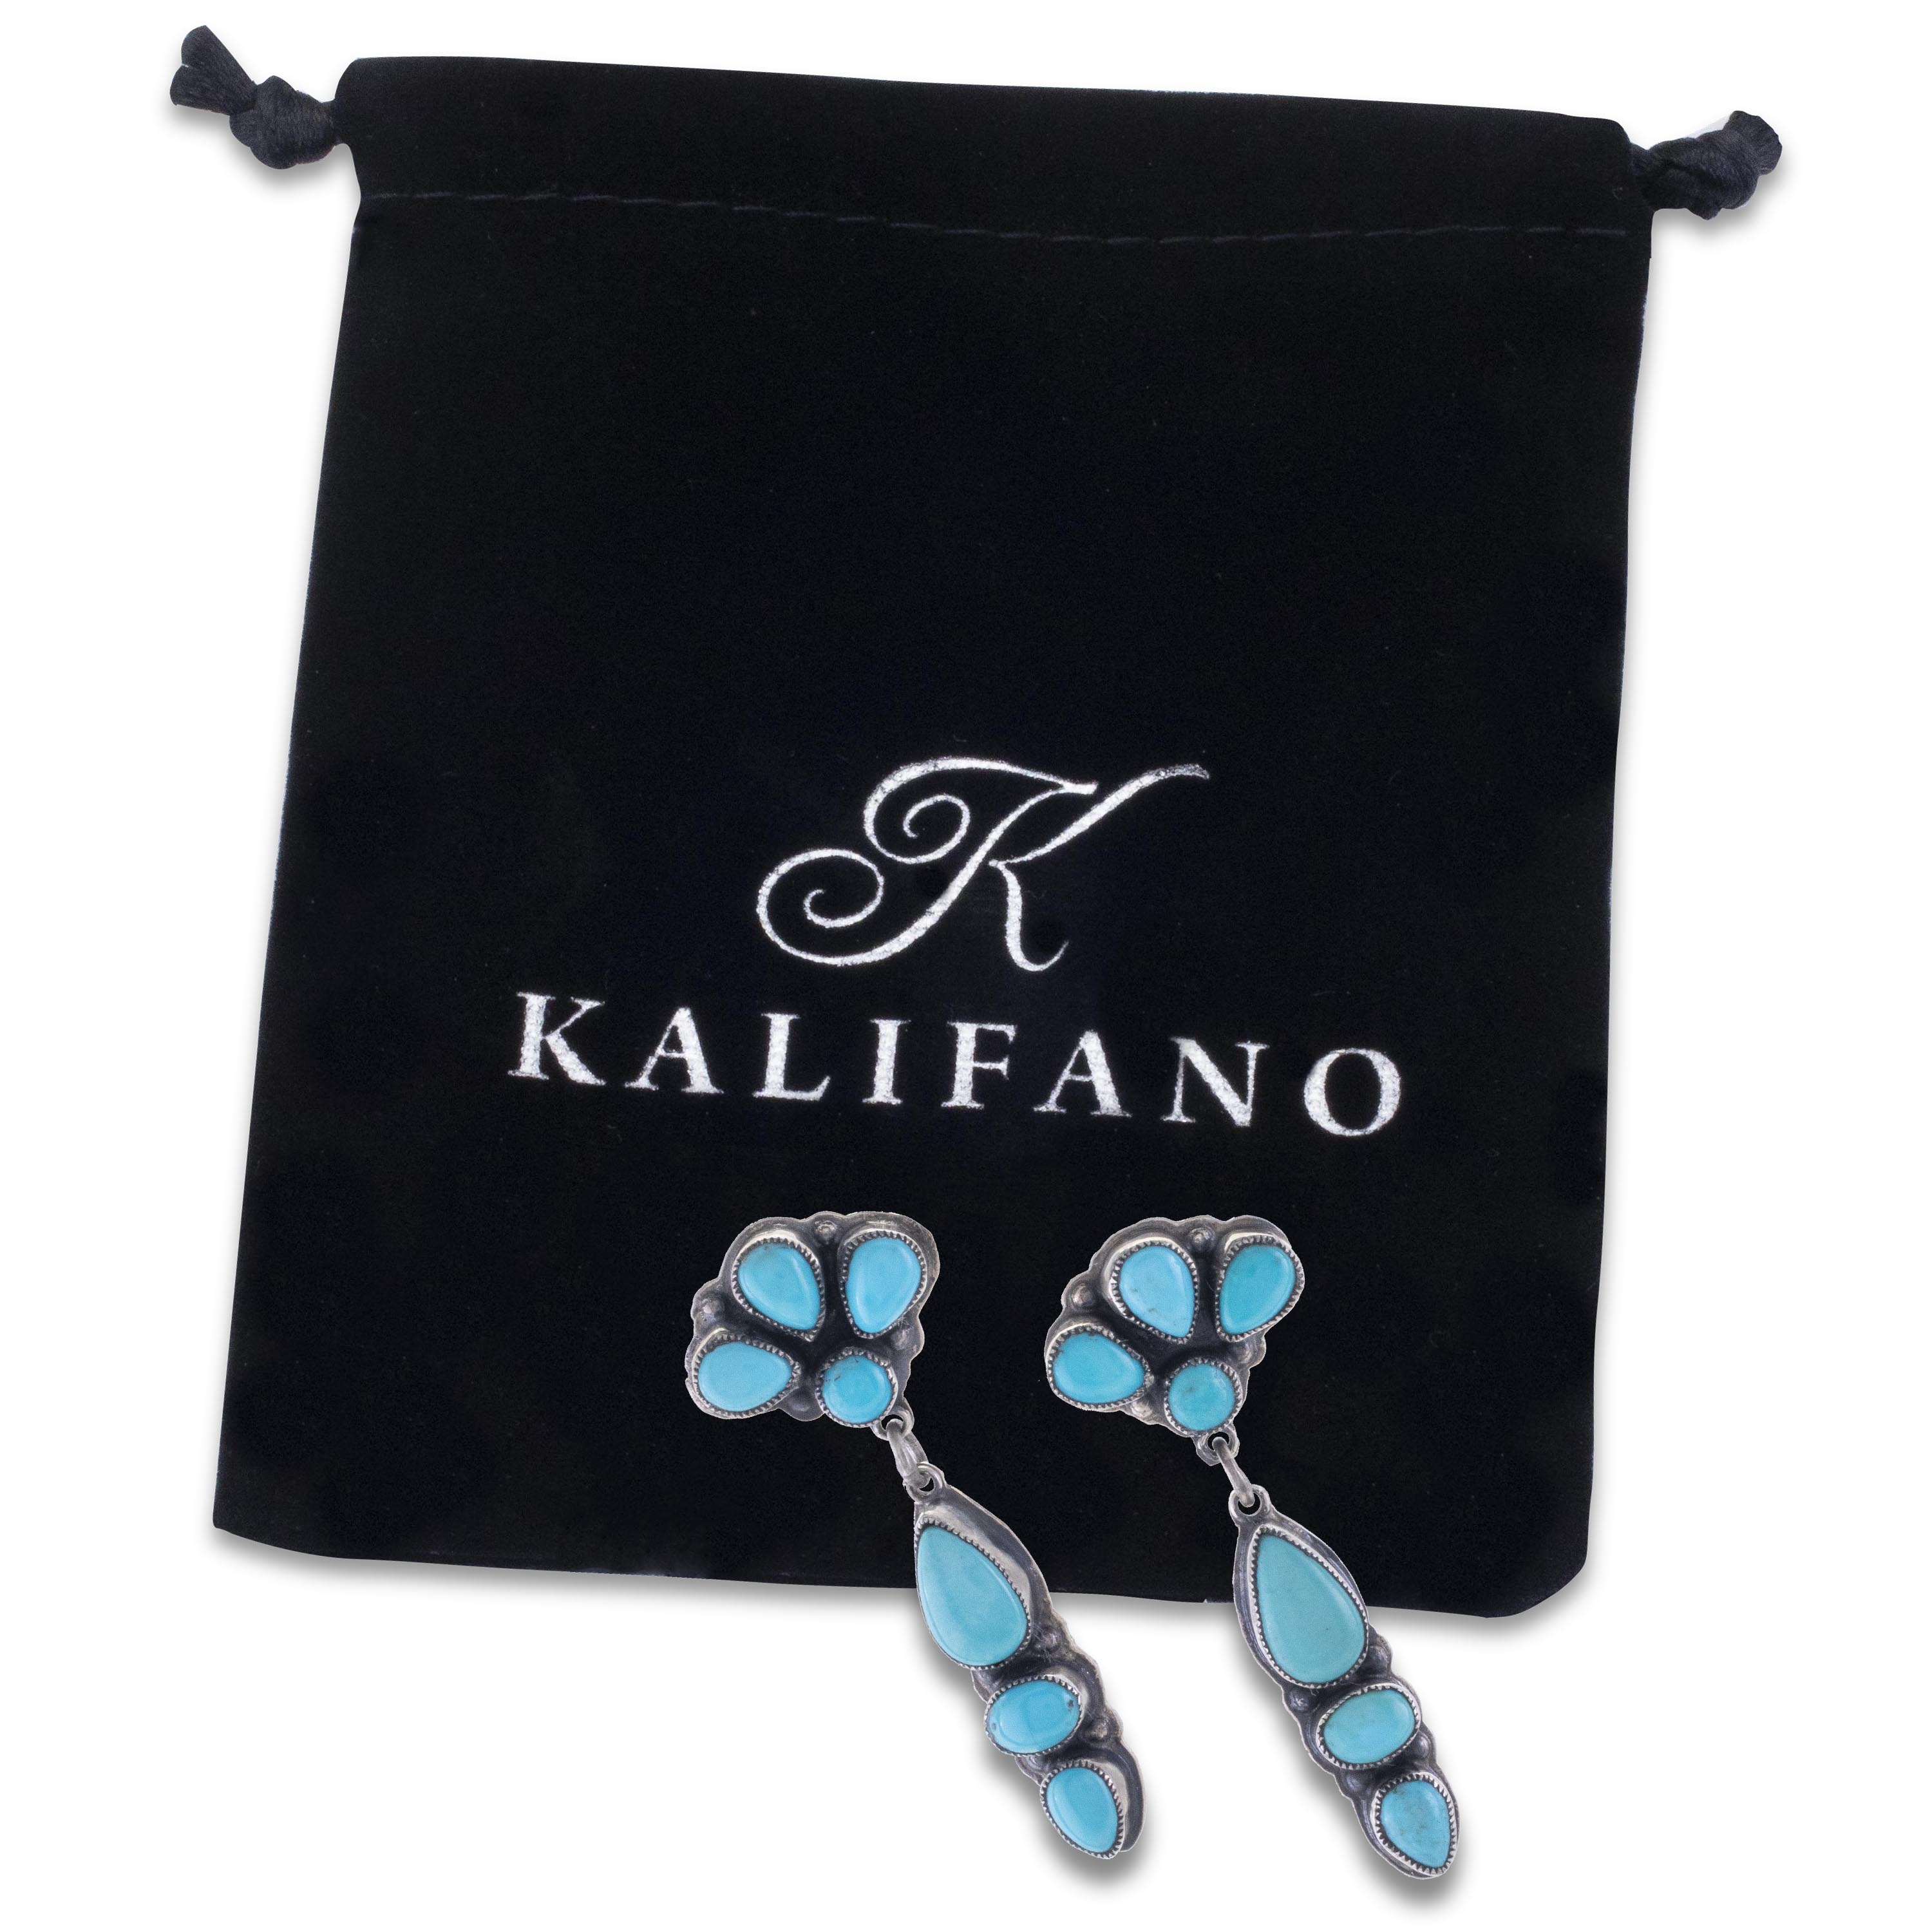 Kalifano Native American Jewelry Leo Feeney Navajo Sleeping Beauty Turquoise USA Native American Made 925 Sterling Silver Dangly Earrings NAE1800.002